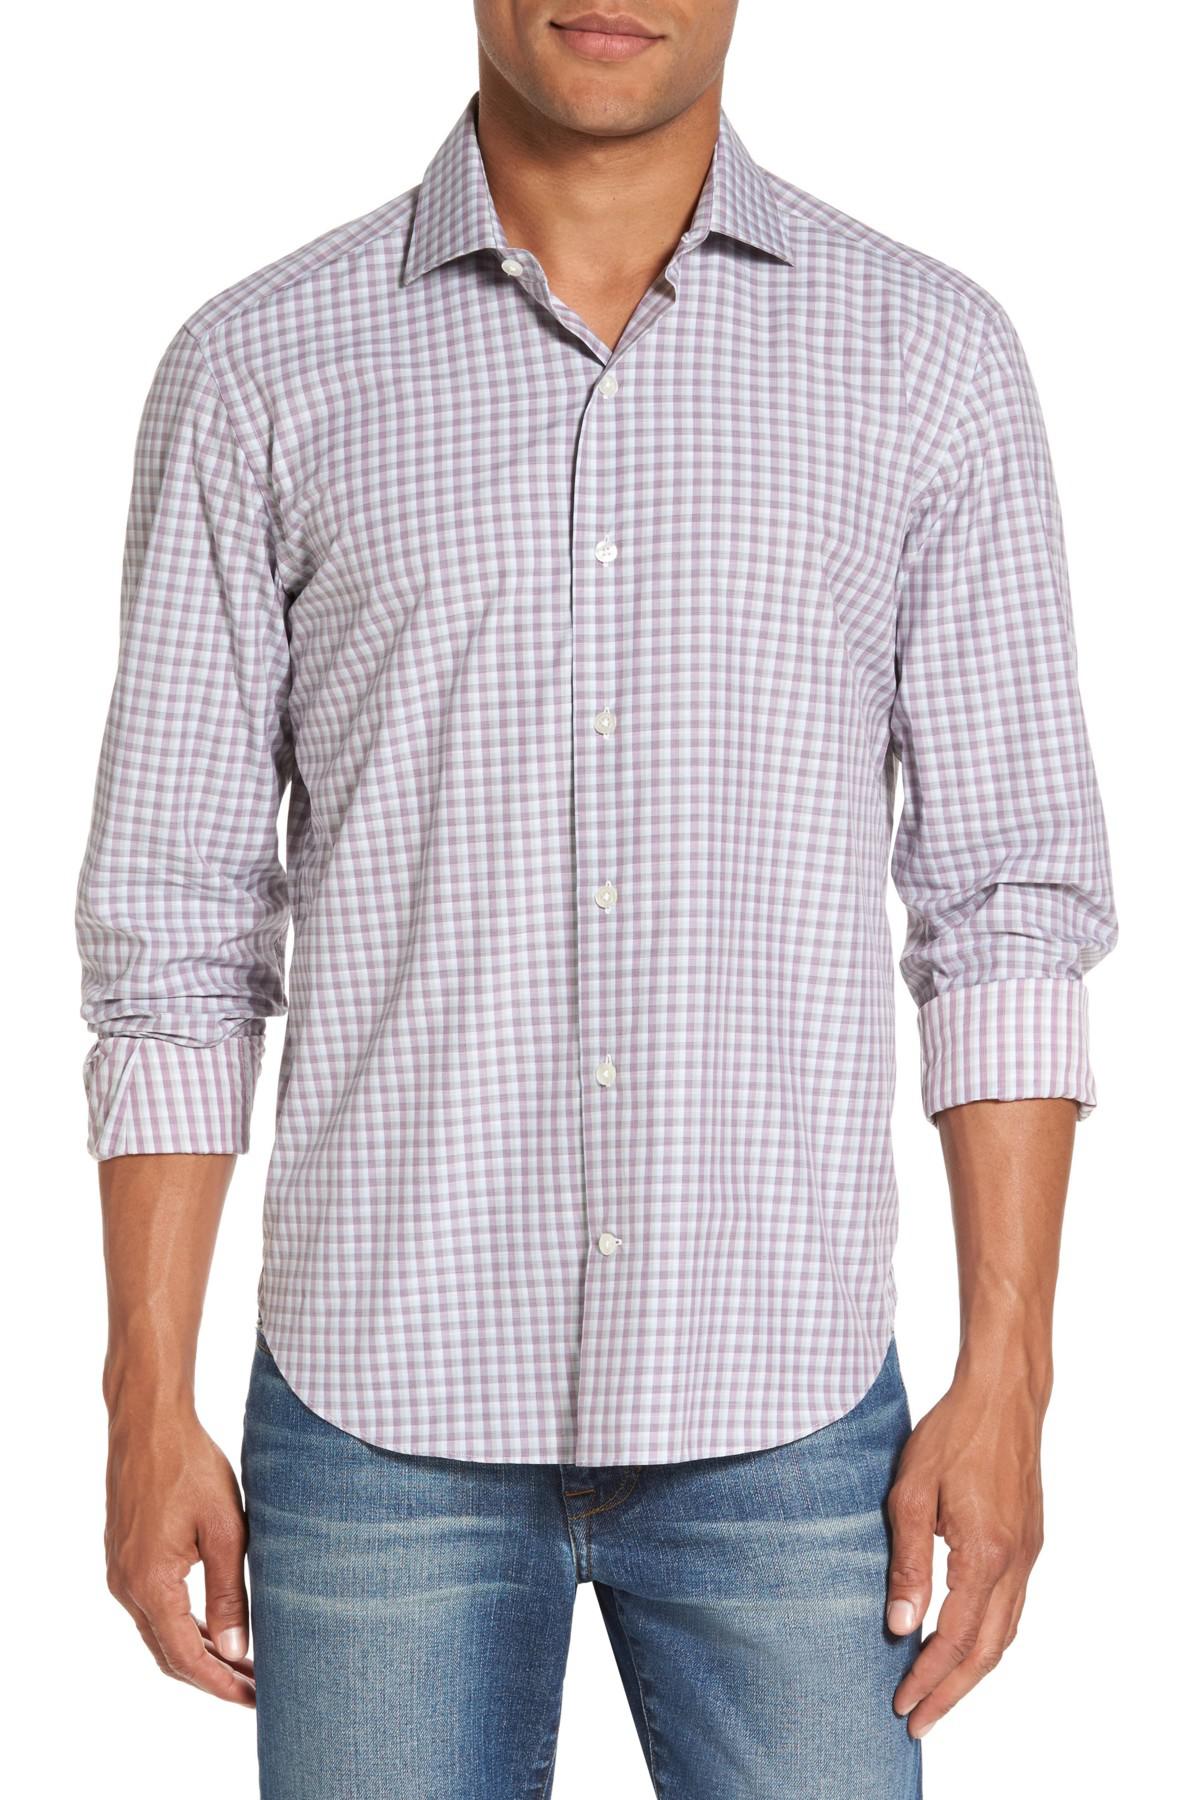 Lyst - Culturata Slim Fit Plaid Sport Shirt in Purple for Men